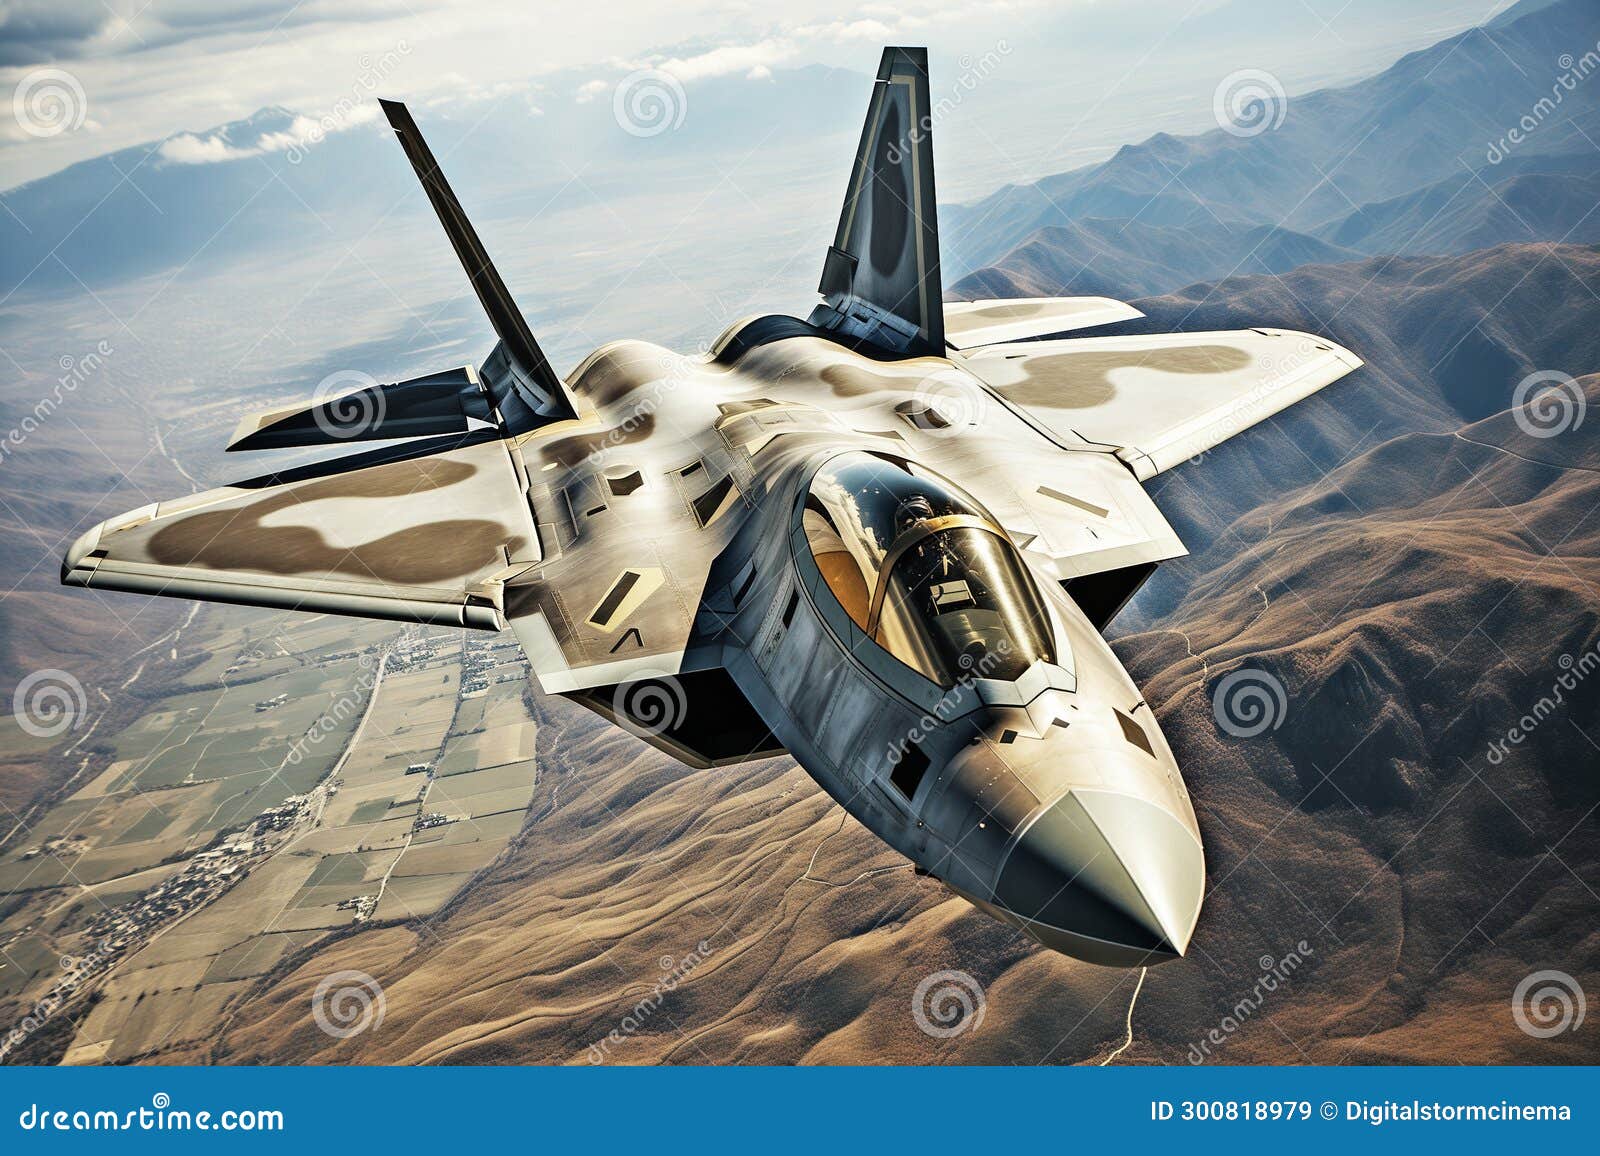 f22 raptor advanced stealth fighter interceptor front view.